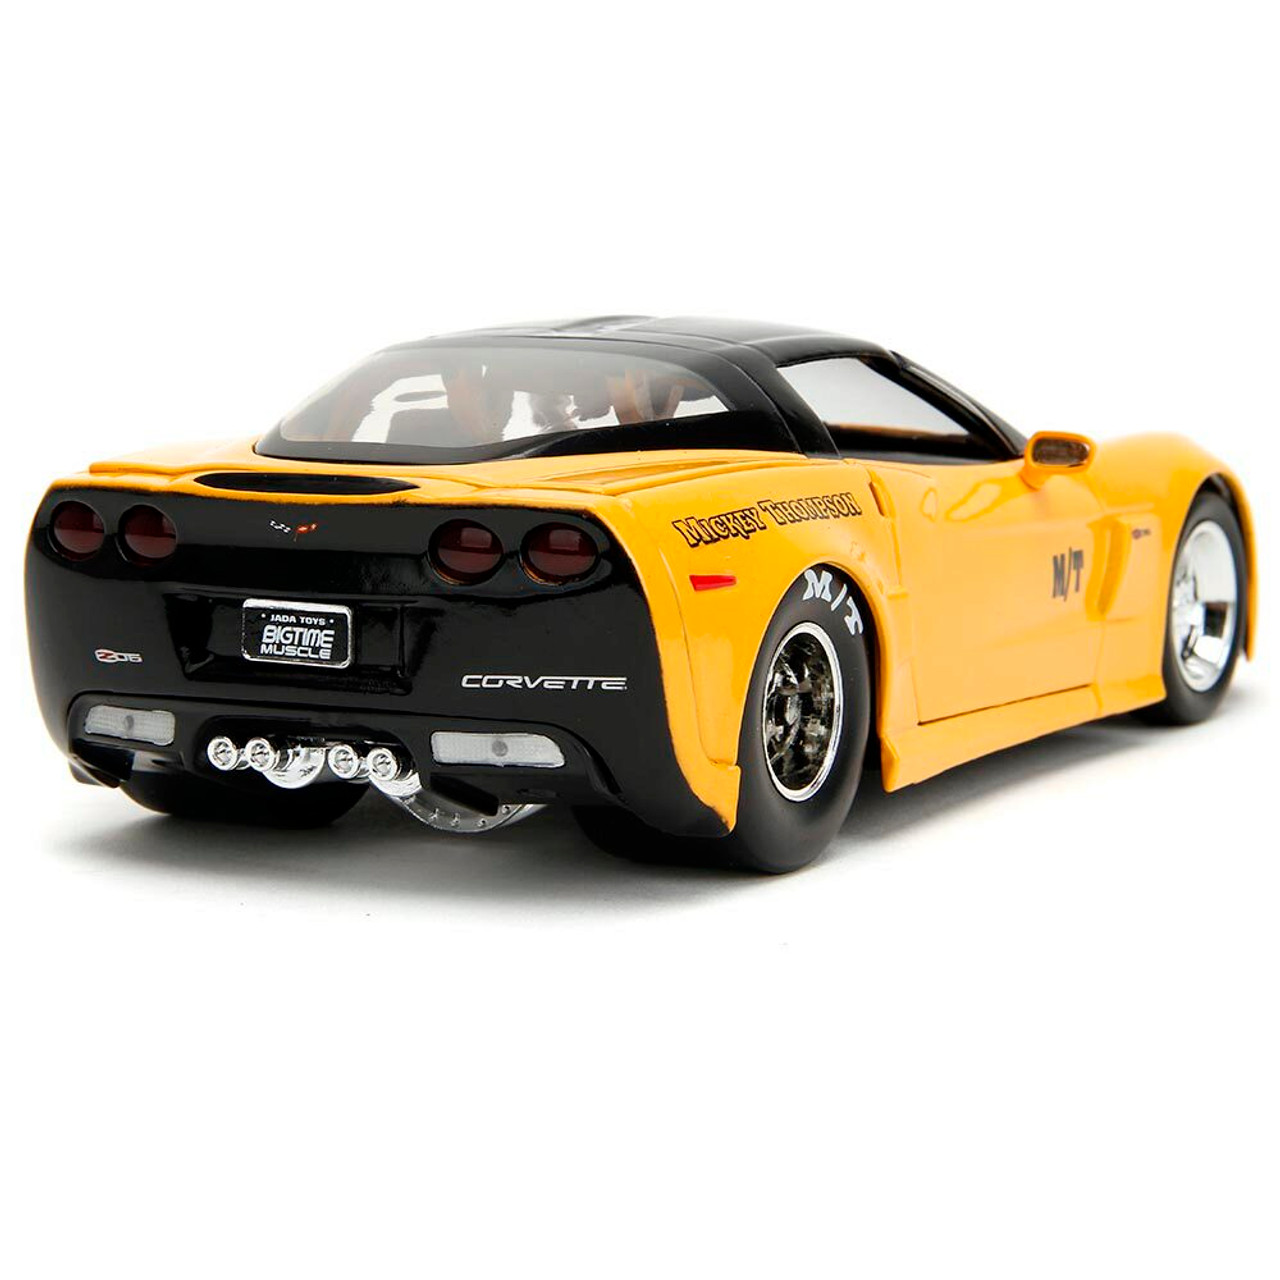 2006 Corvette Z06 - Yellow 1:24 Scale Diecast Model Car